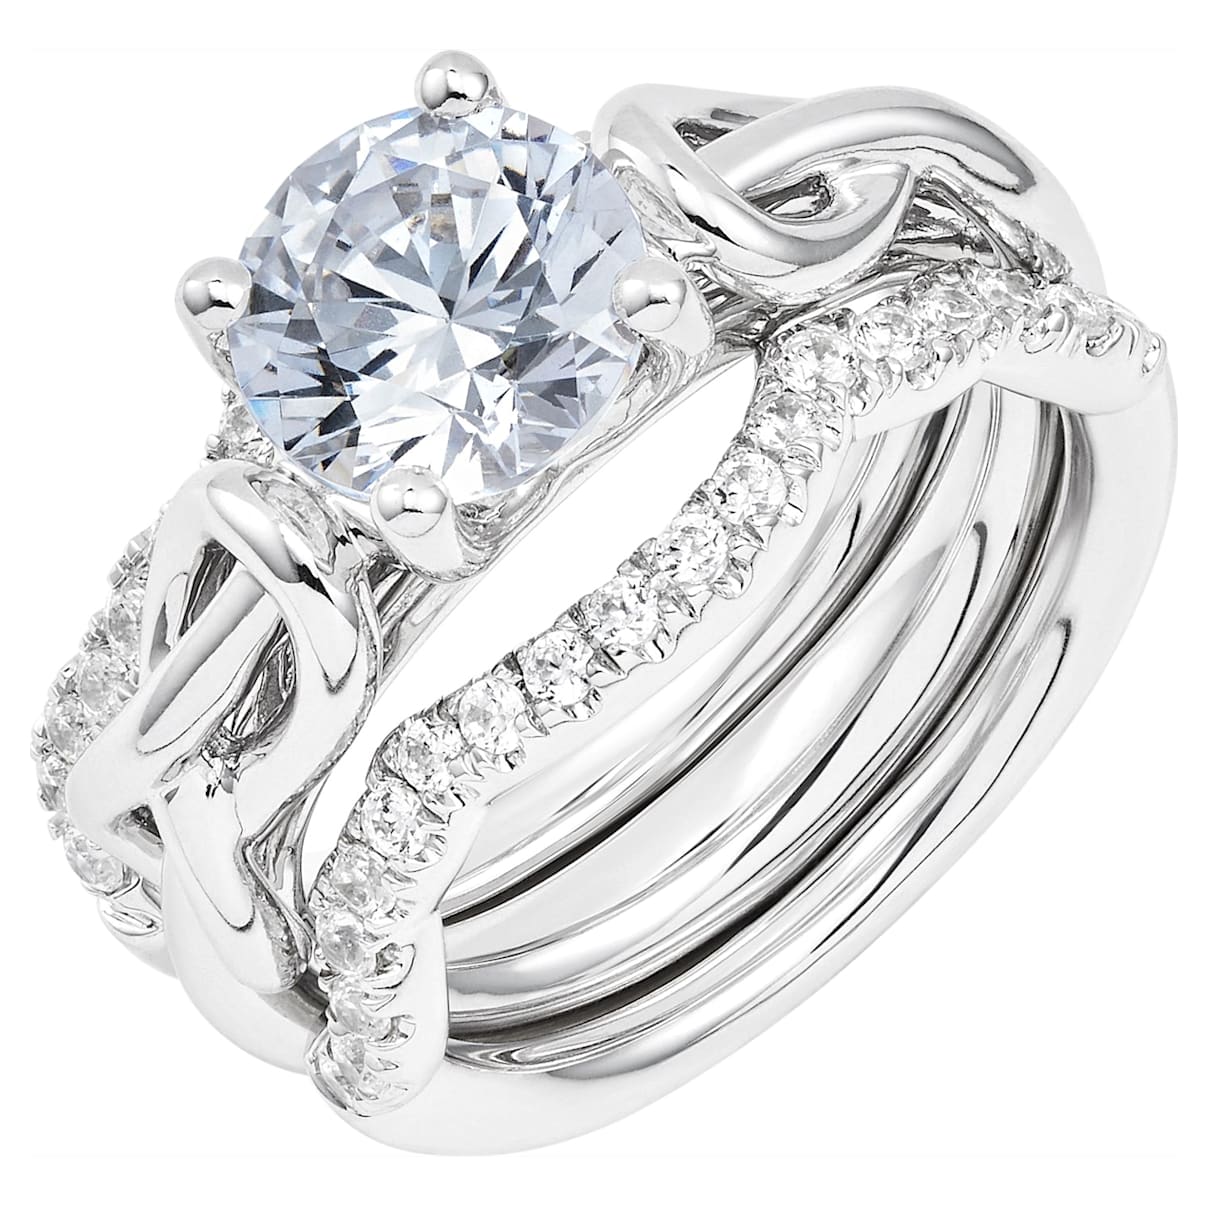 Knot of True Love Classic Solitaire Ring 2ct, Swarovski Created Diamonds, 18K White Gold, Size 52